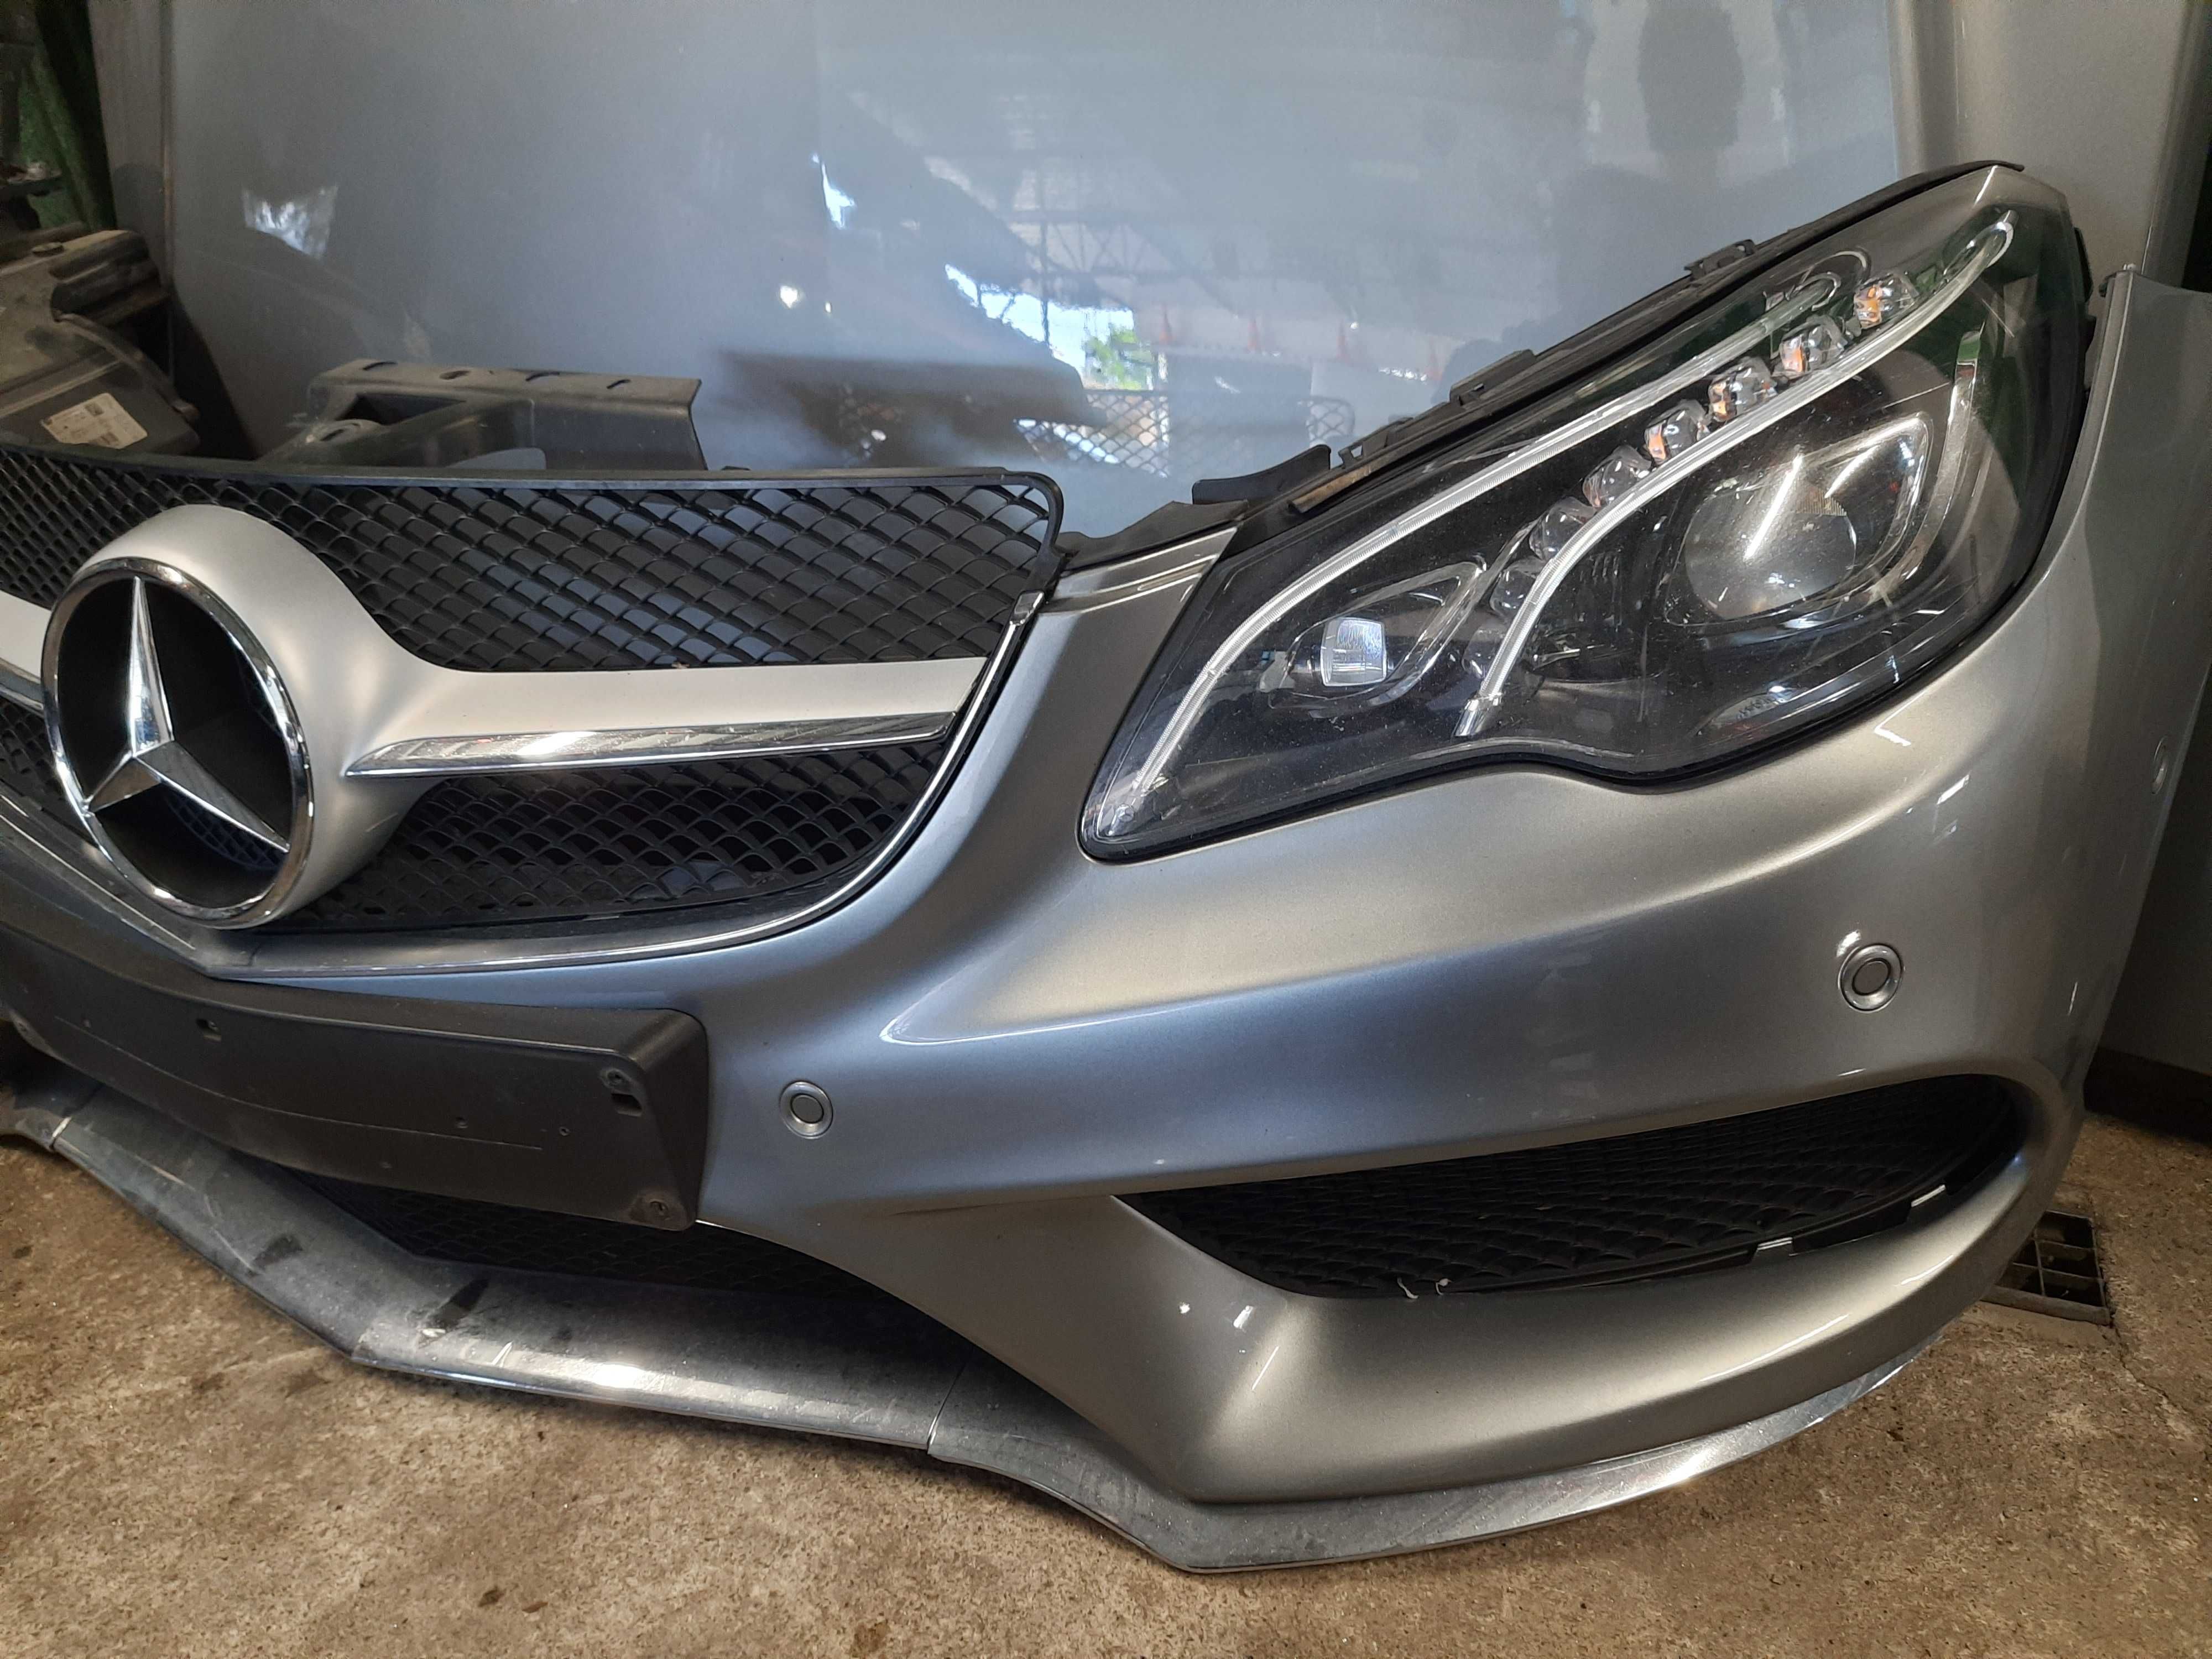 Mercedes e220d 2013 frente completa